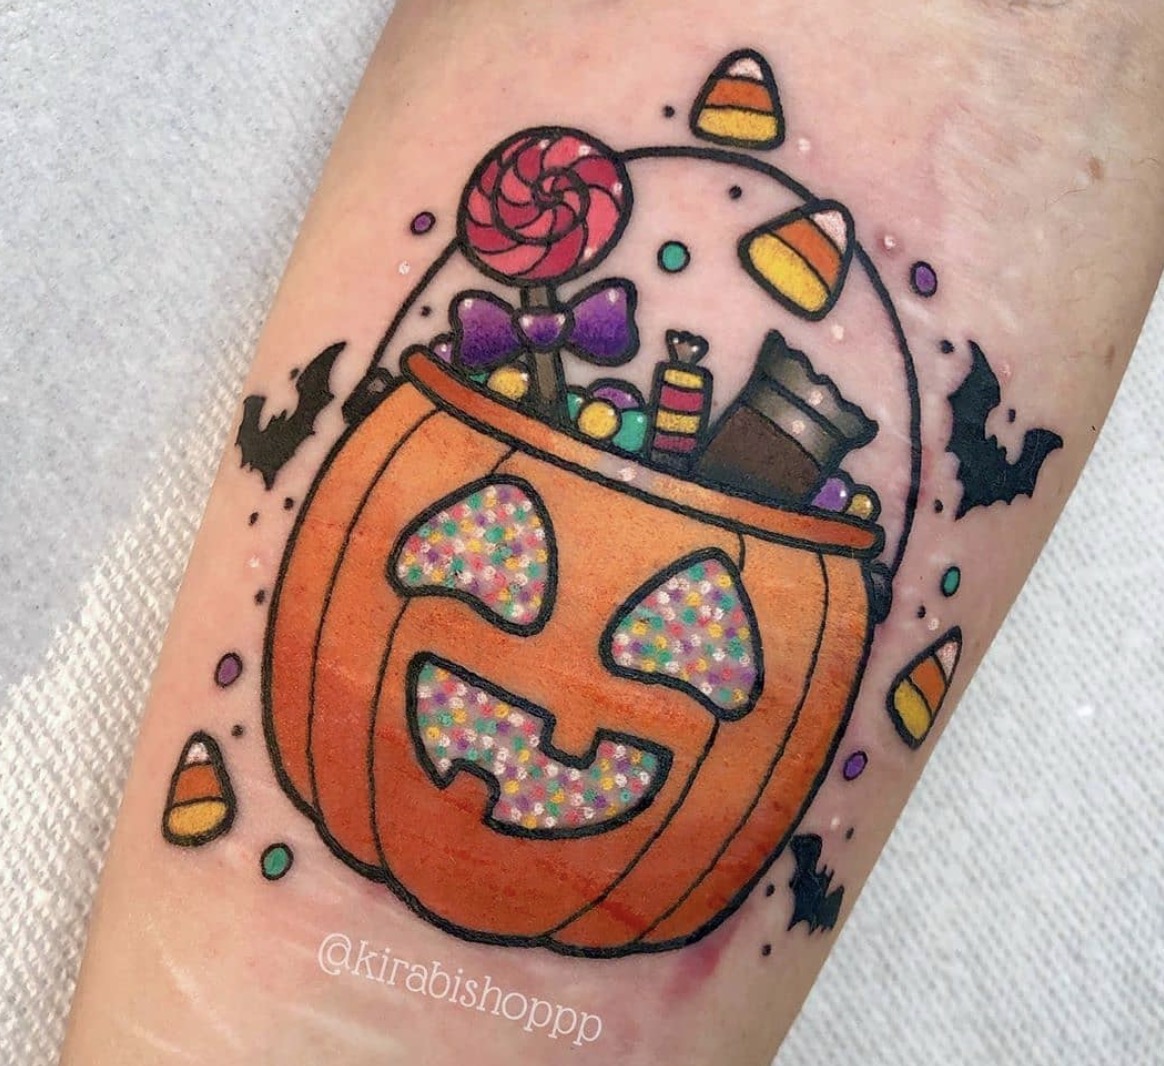 Spooky Season tattoos 